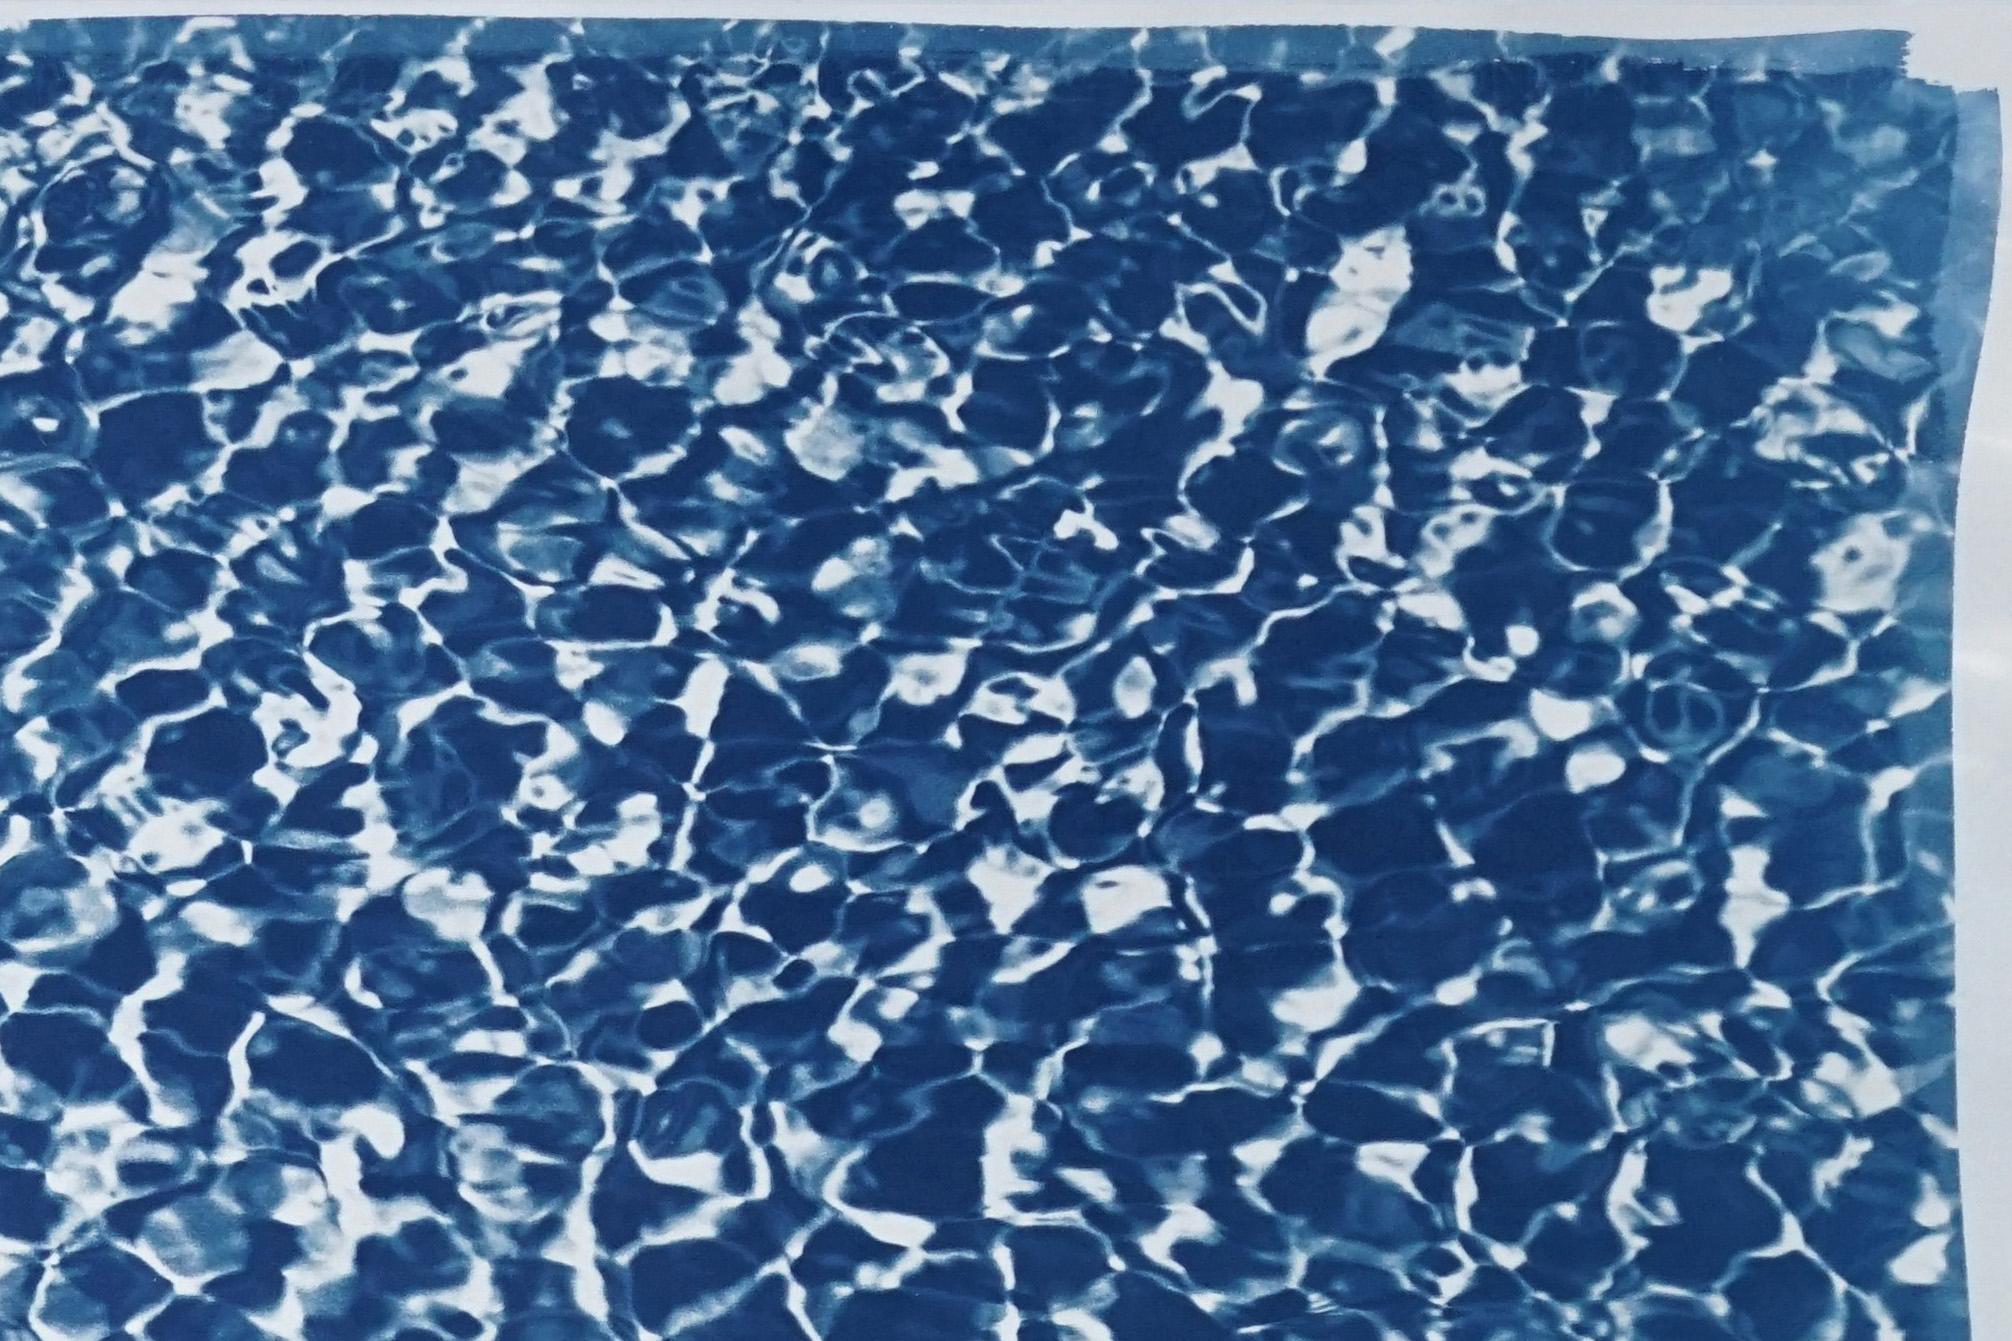 Infinity Pool Water Reflections, Blue & White Pattern, Handmade Cyanotype Print 1